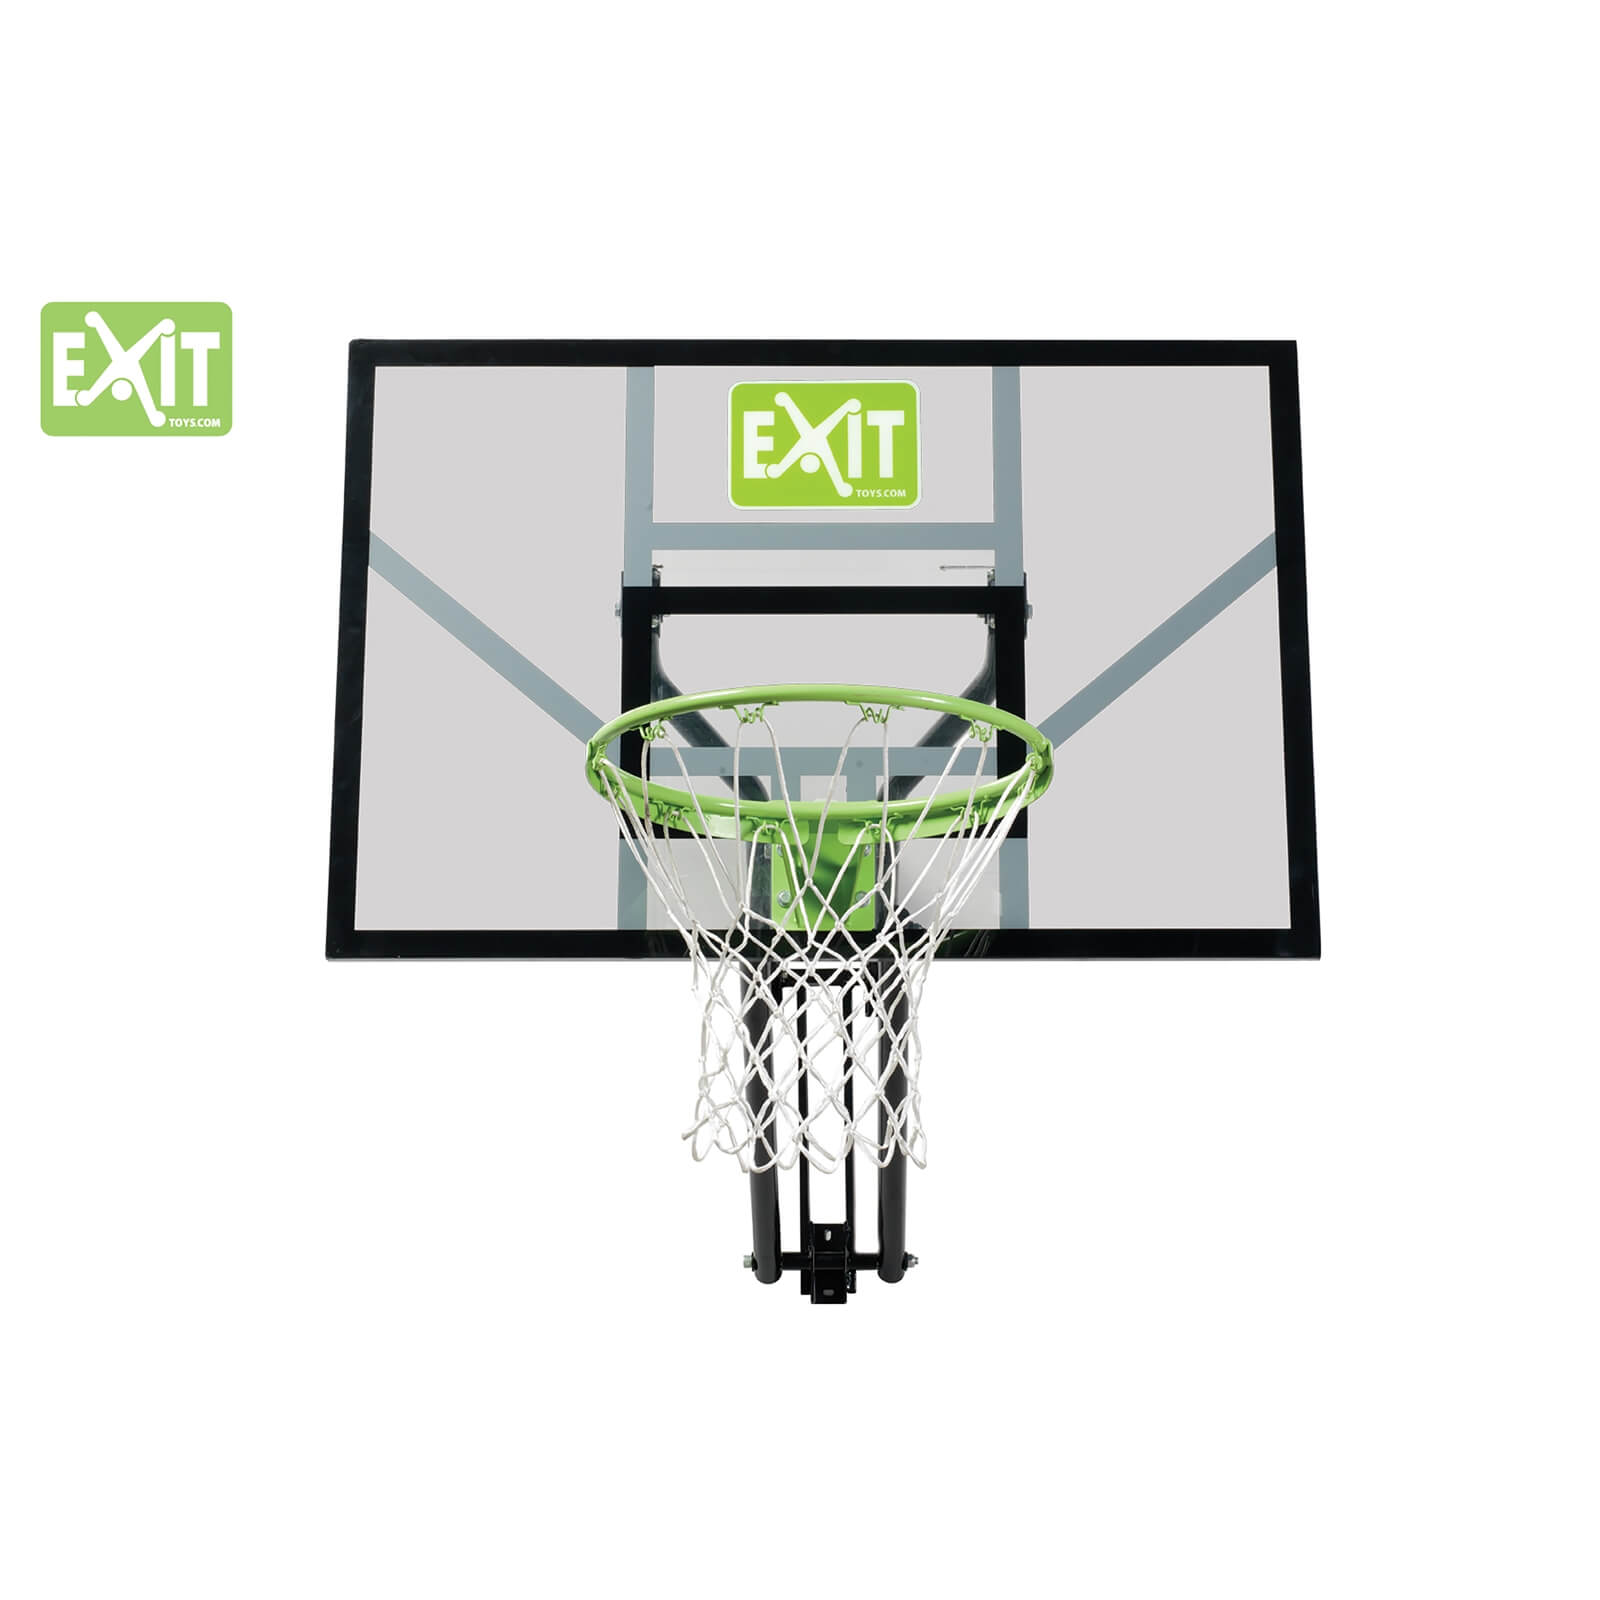 Exit Galaxy Basketball Wall Mount Basket